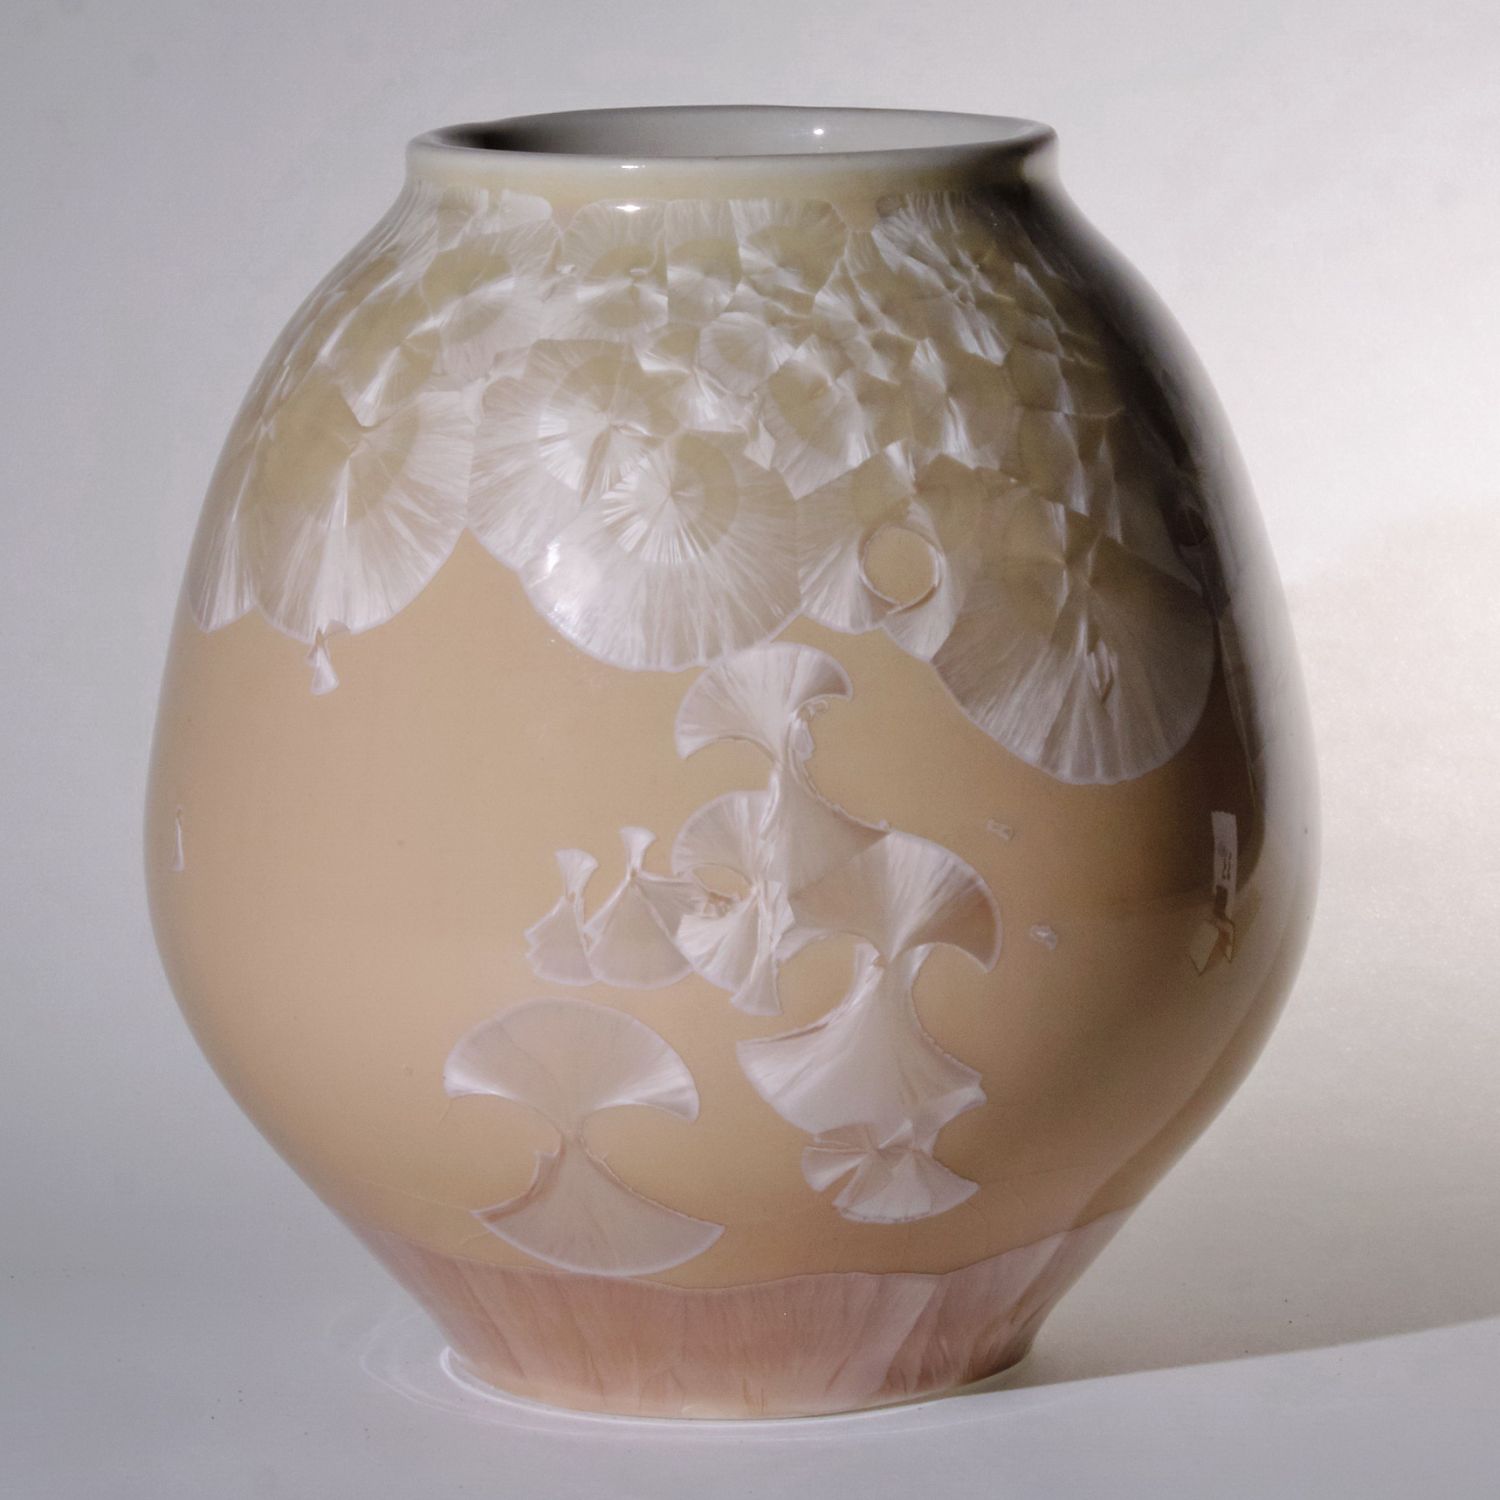 Yumiko Katsuya: Dark Pink Vase Product Image 2 of 2